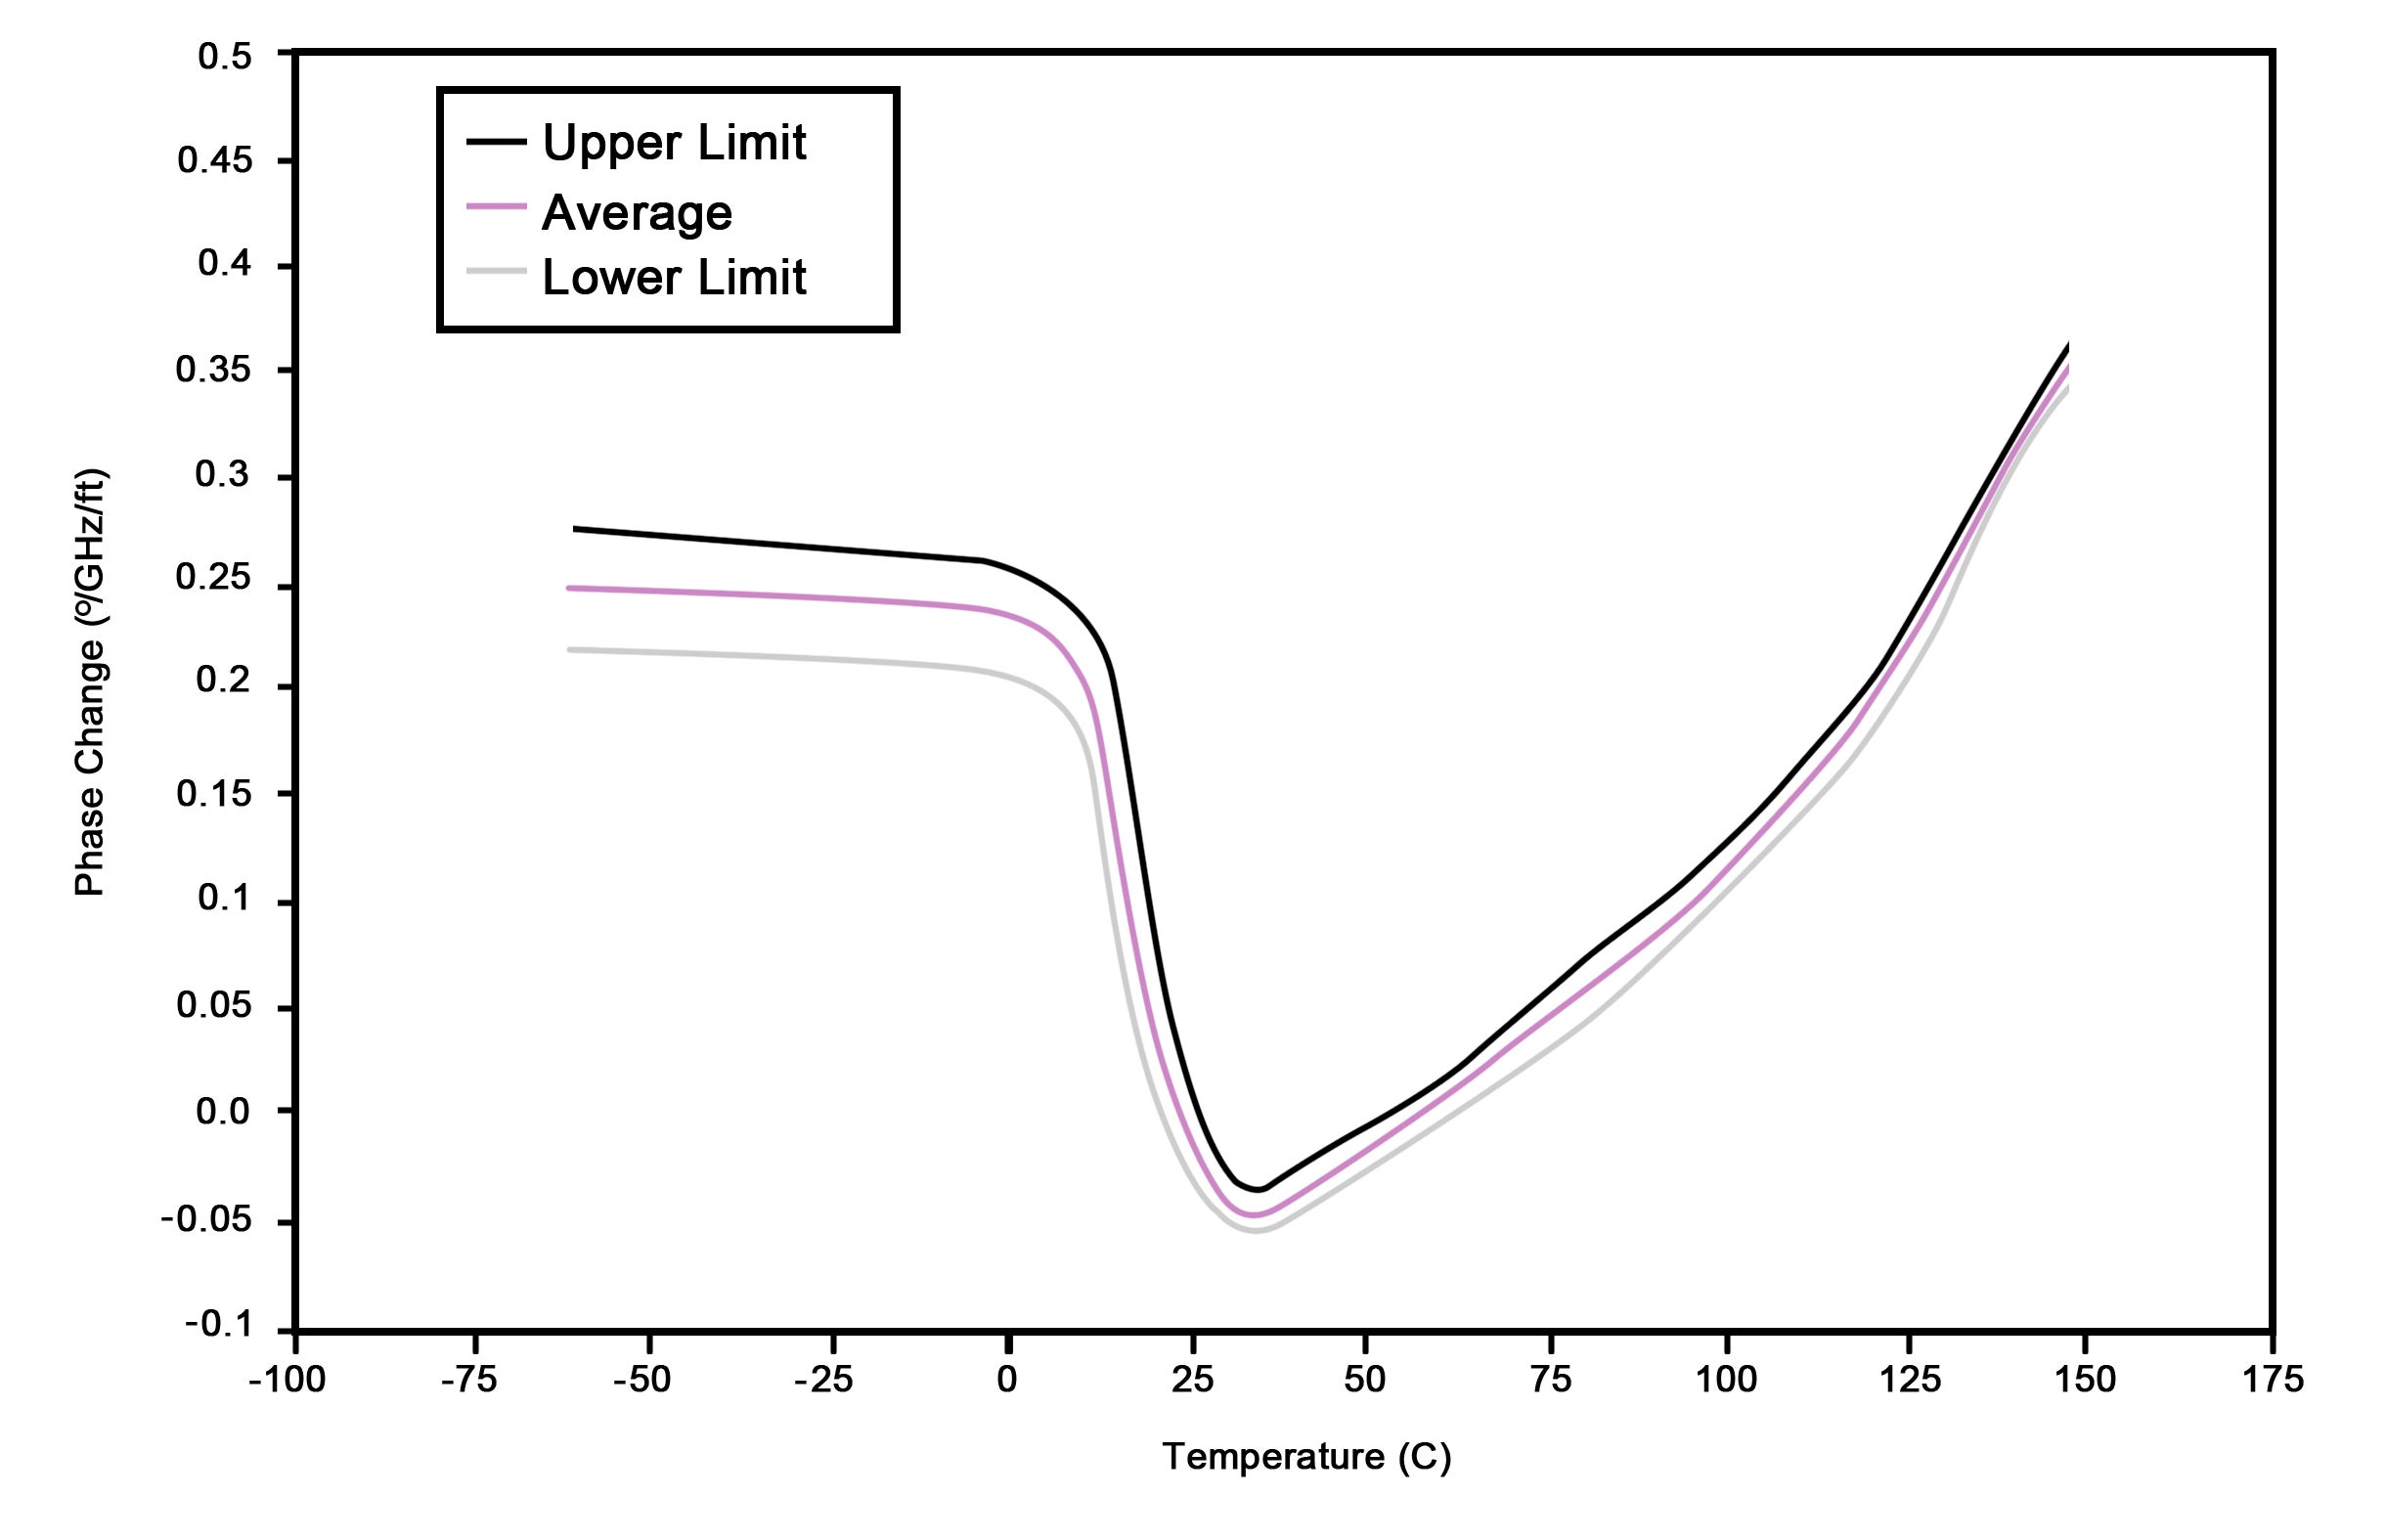 Phase change vs. temperature G5 cable, bulk property